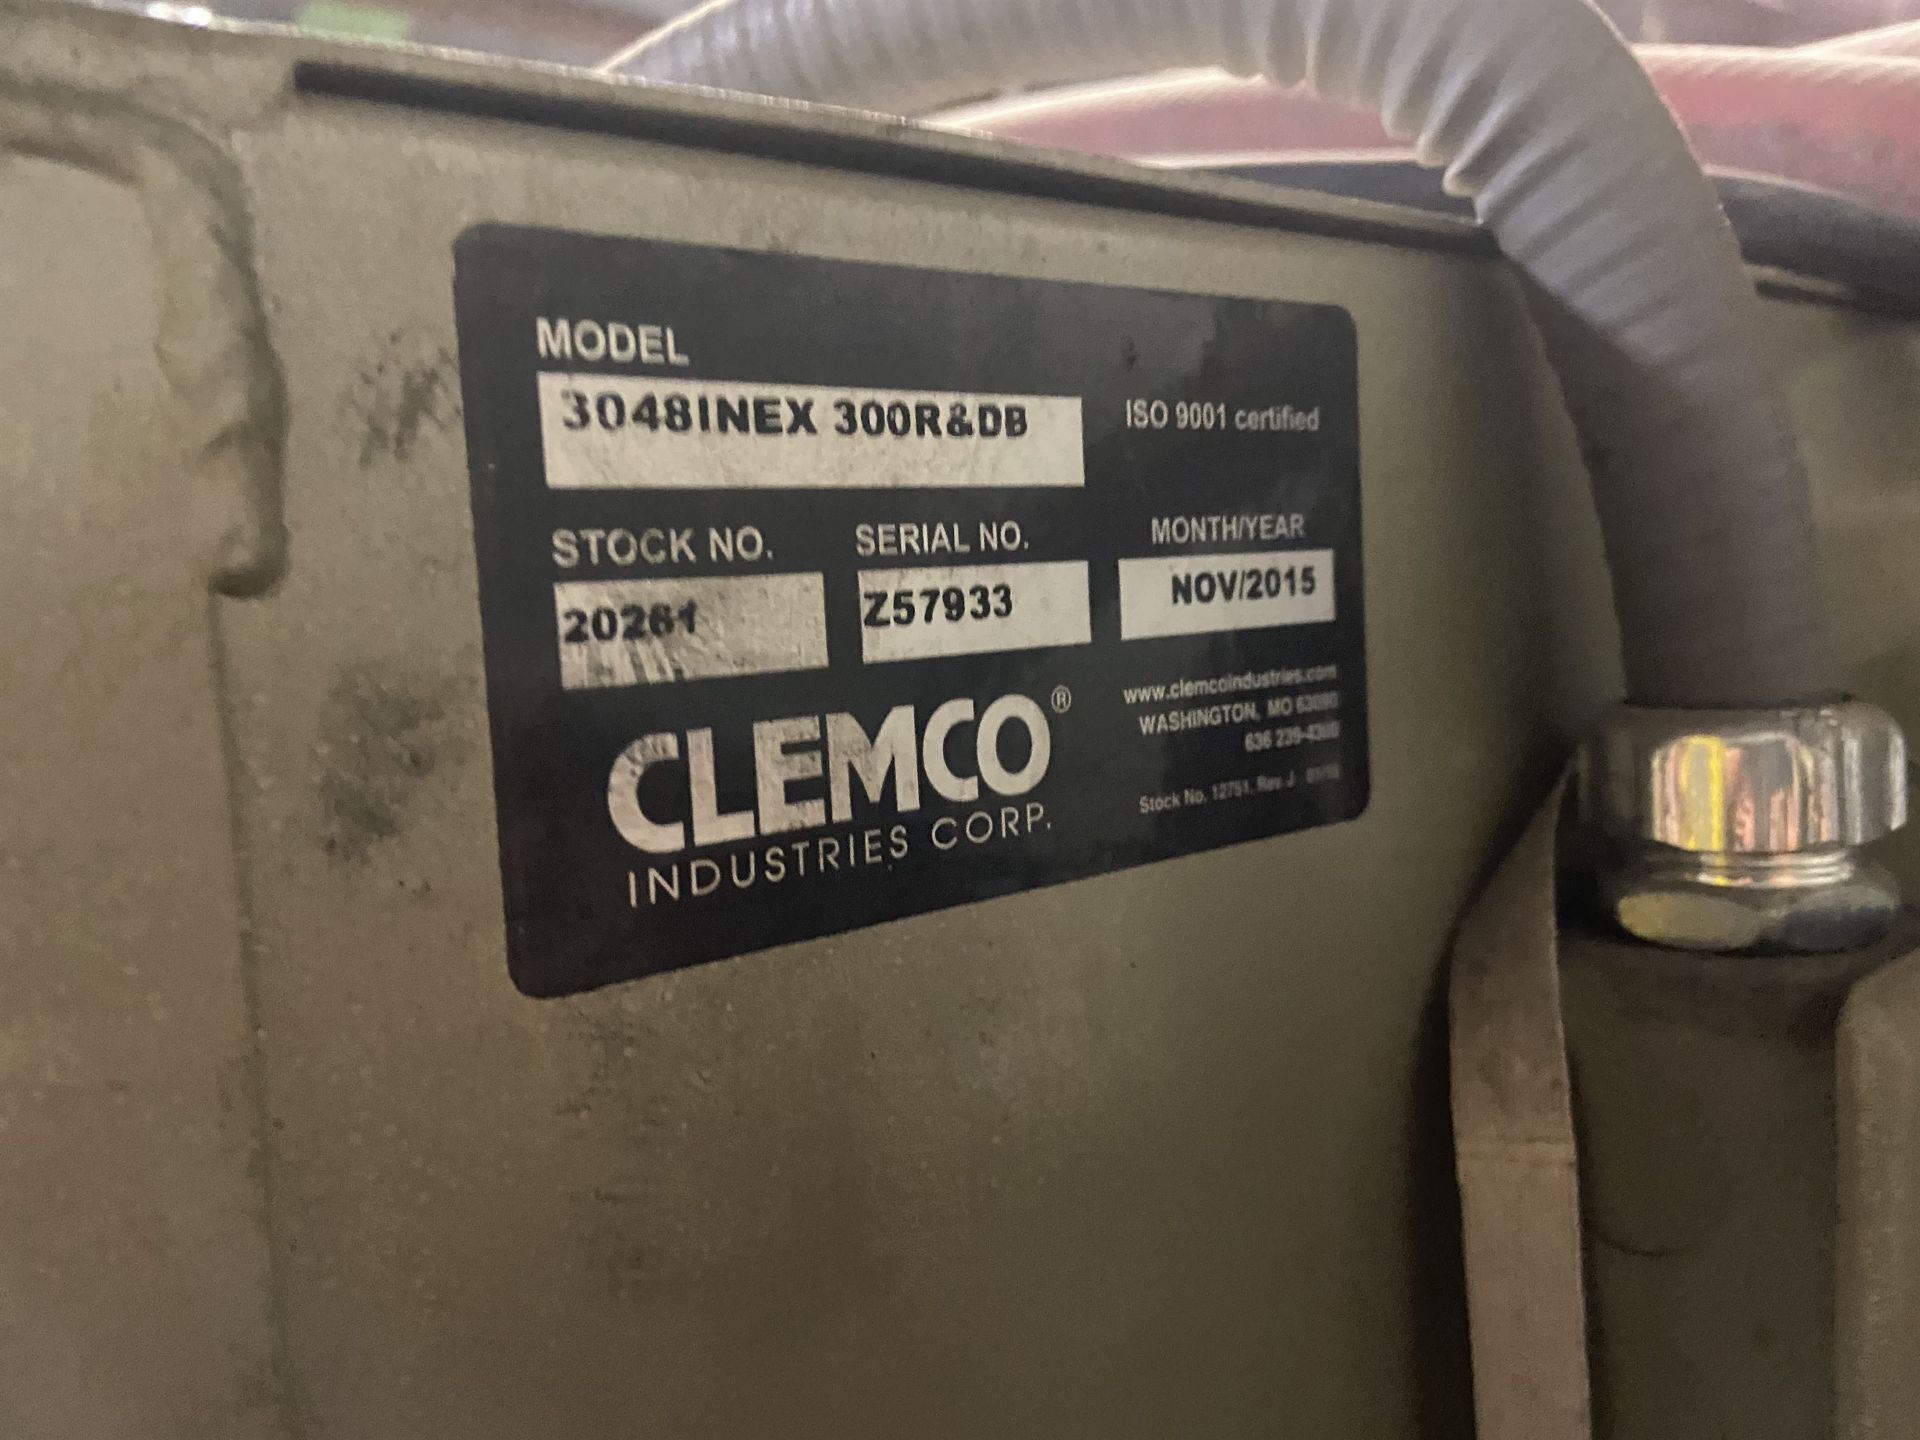 2015 Clemco Model 3048INEX 300R&DB Shot Blasting Cabinet s/n Z57933 - Image 3 of 3